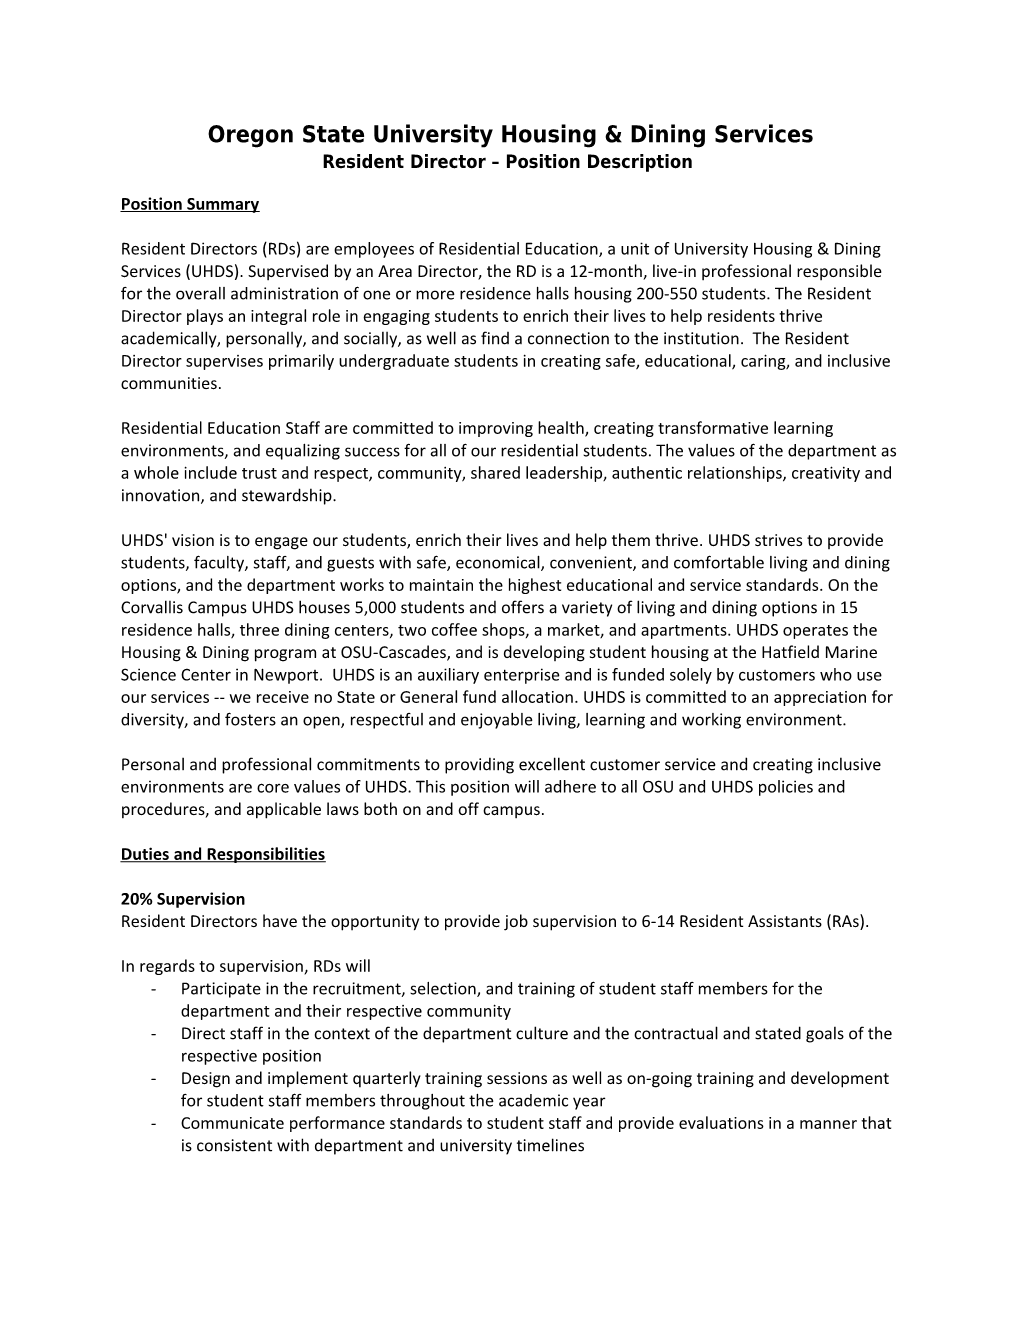 Oregon State University Housing & Dining Services Resident Director Position Description